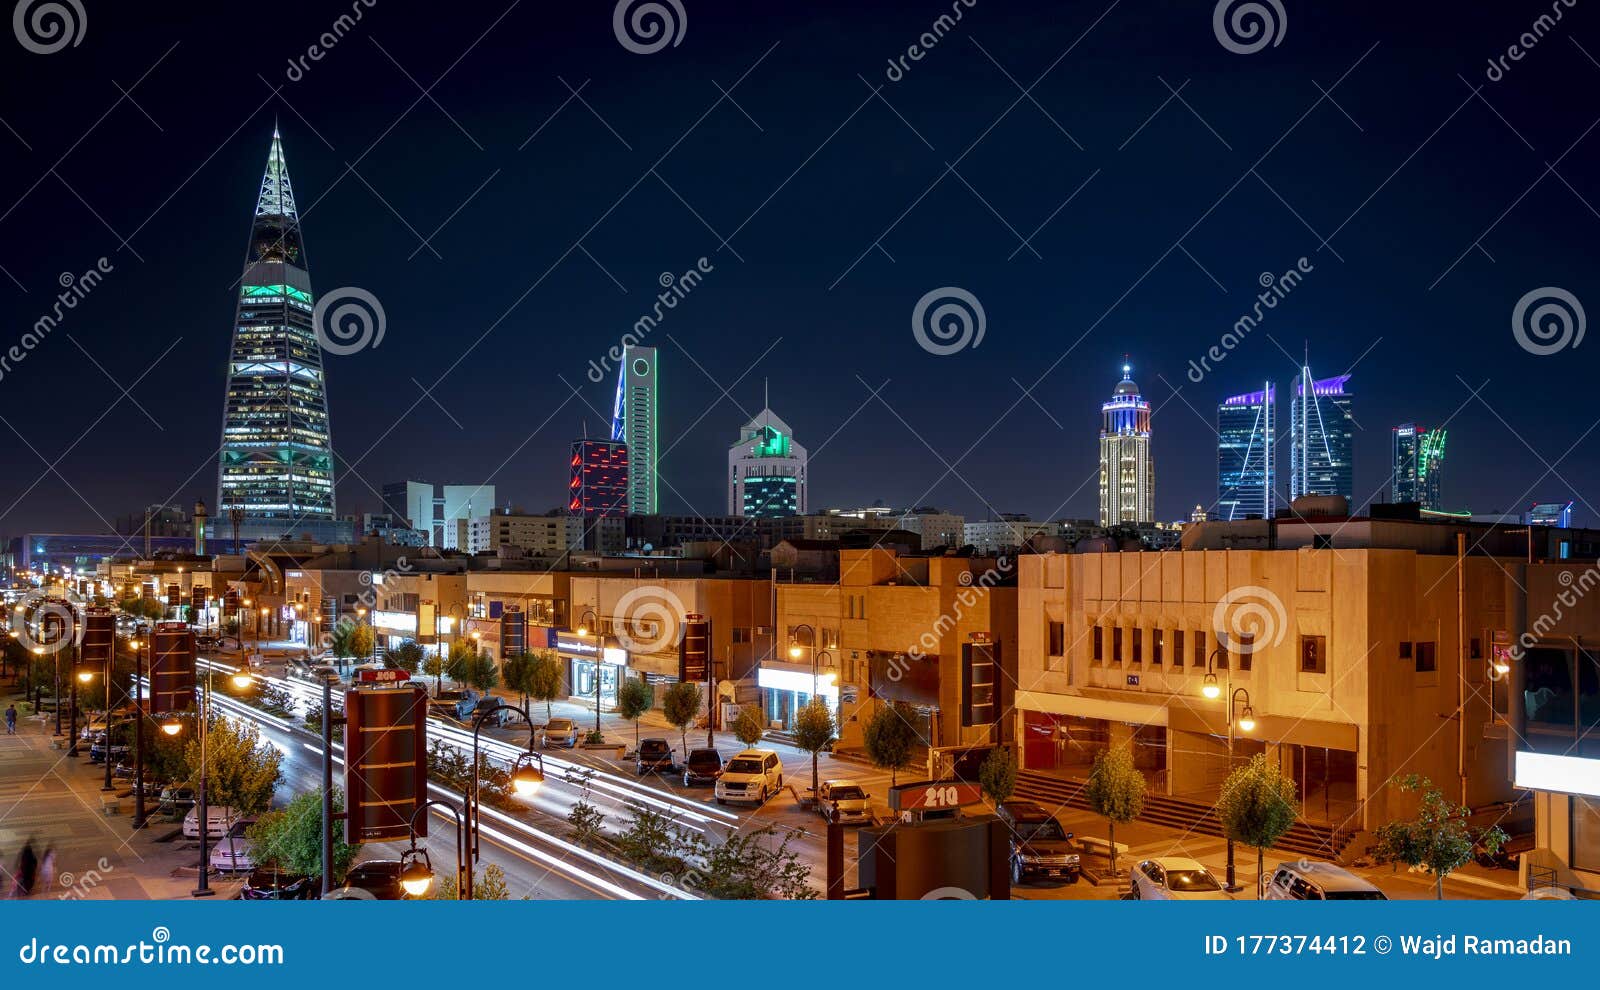 riyadh, saudi arabia, al_tahlia street, tahlia street, faisalia tower, al faisaliah tower Ã¢â¬â riyadh towers, landscape at night,